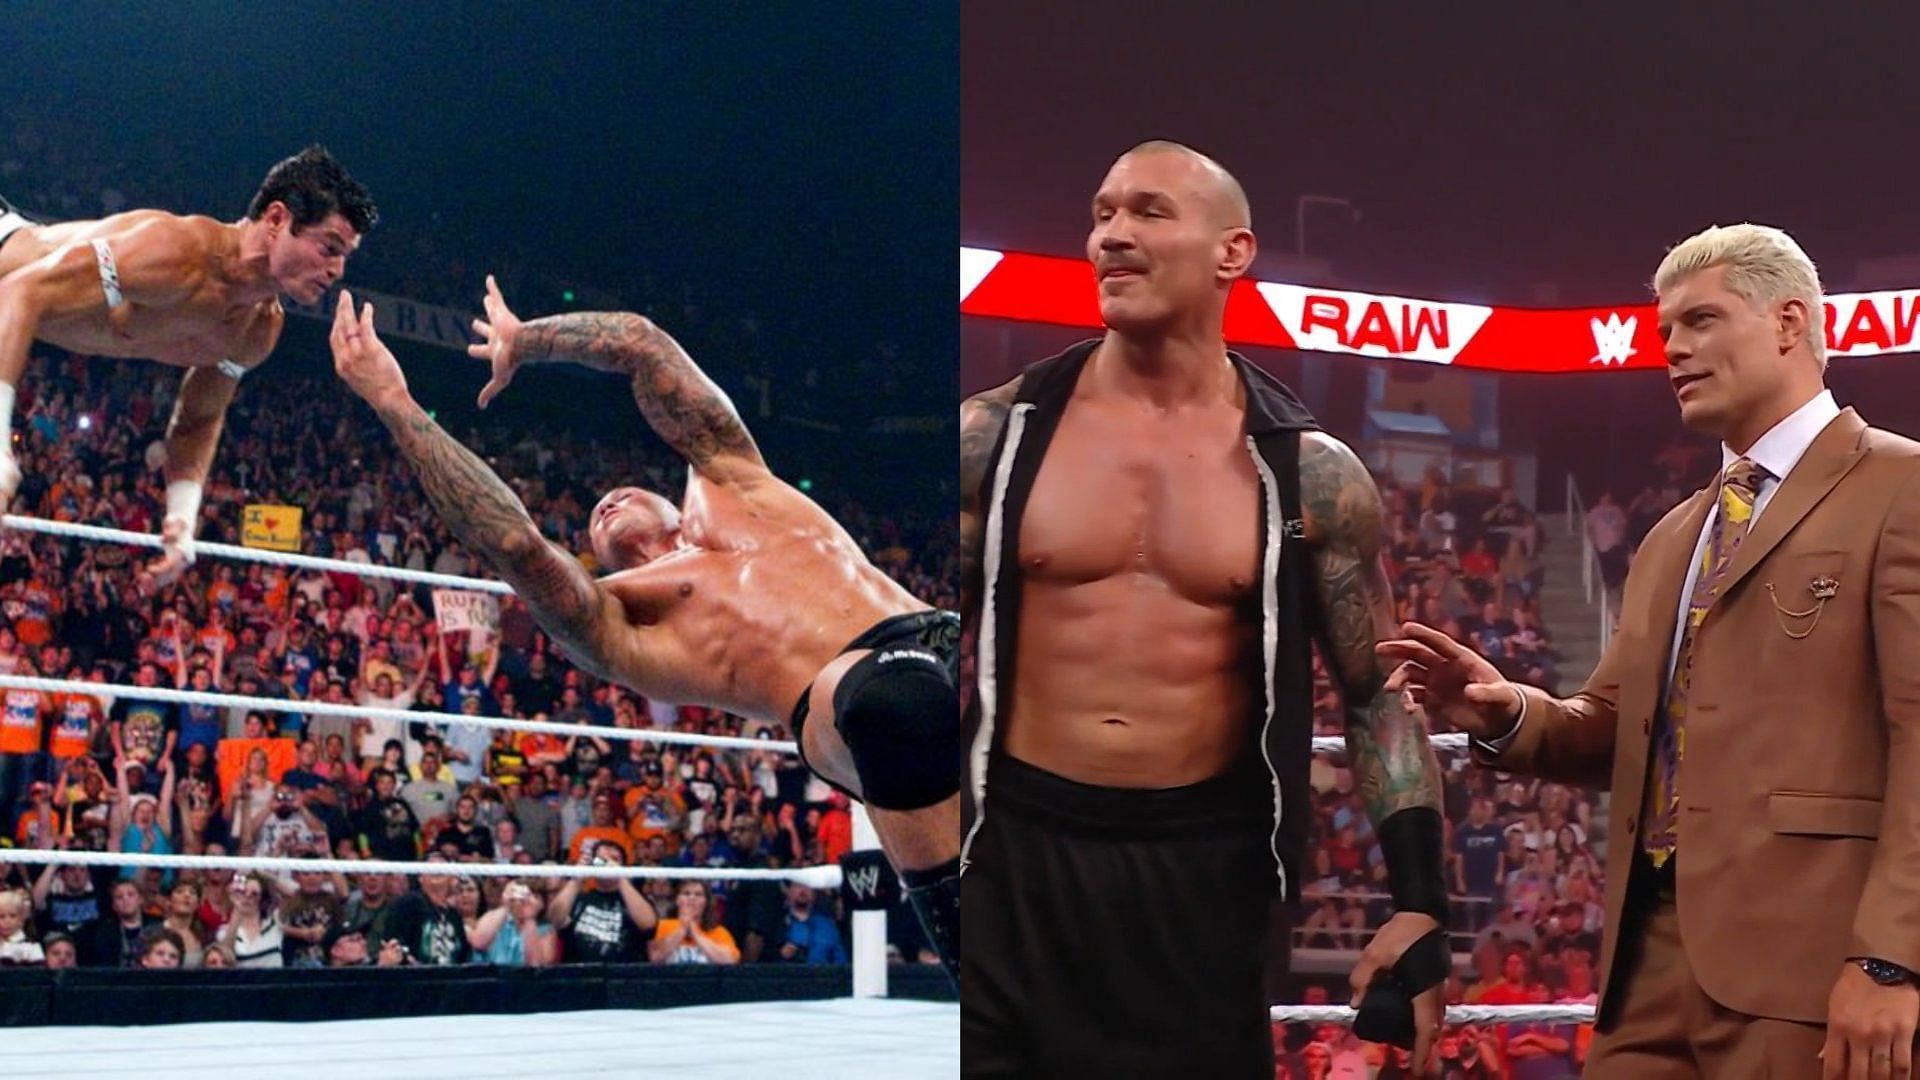 Randy Orton is set to make his return at Survivor Series